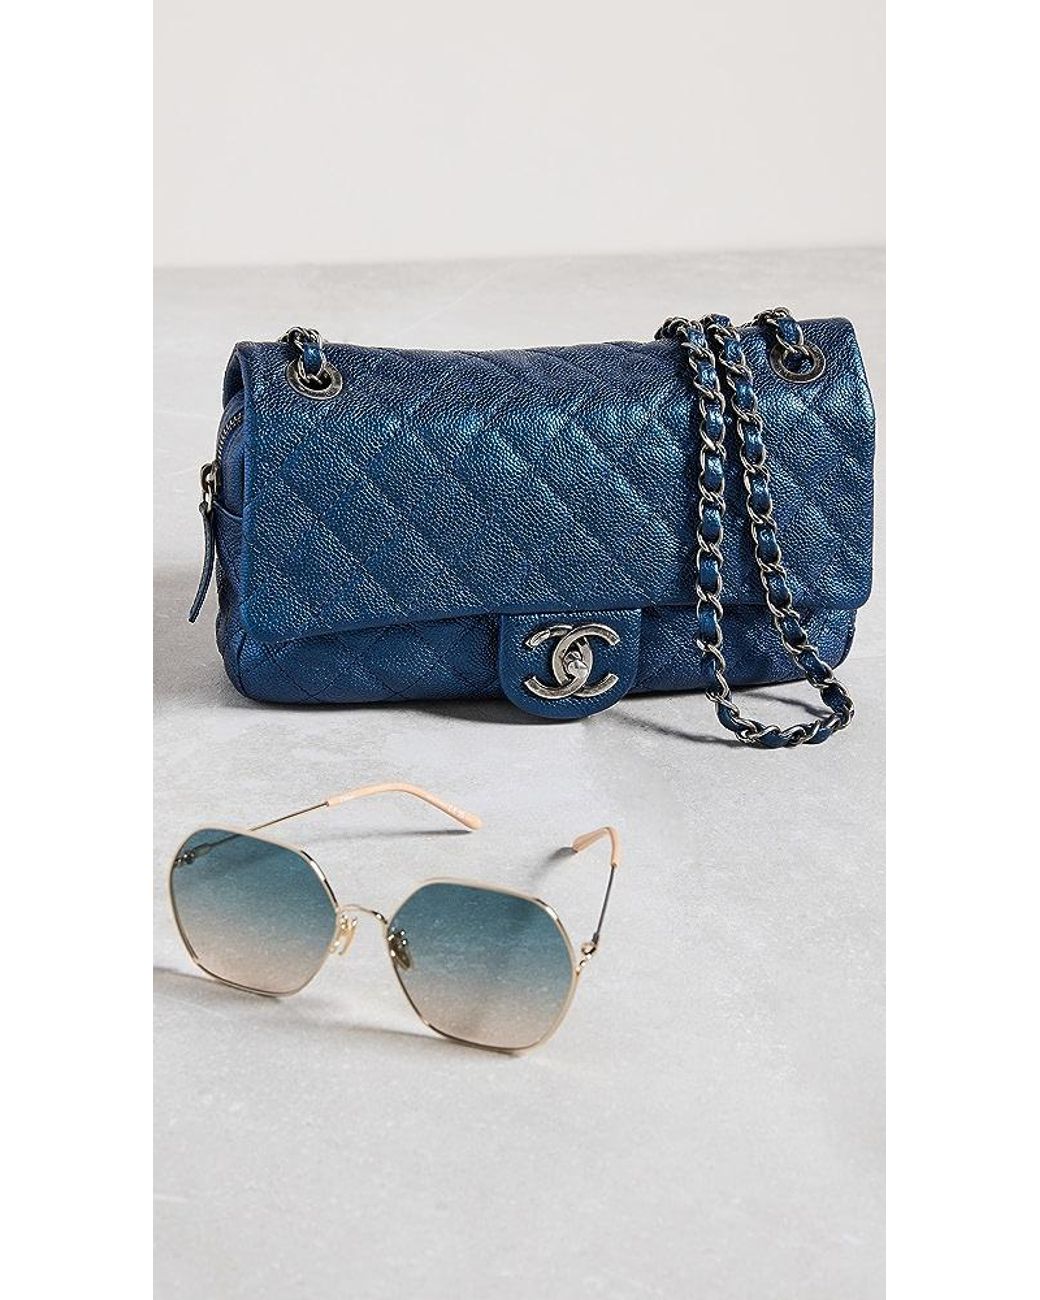 Chanel Blue Lambskin Chain Boy Bag